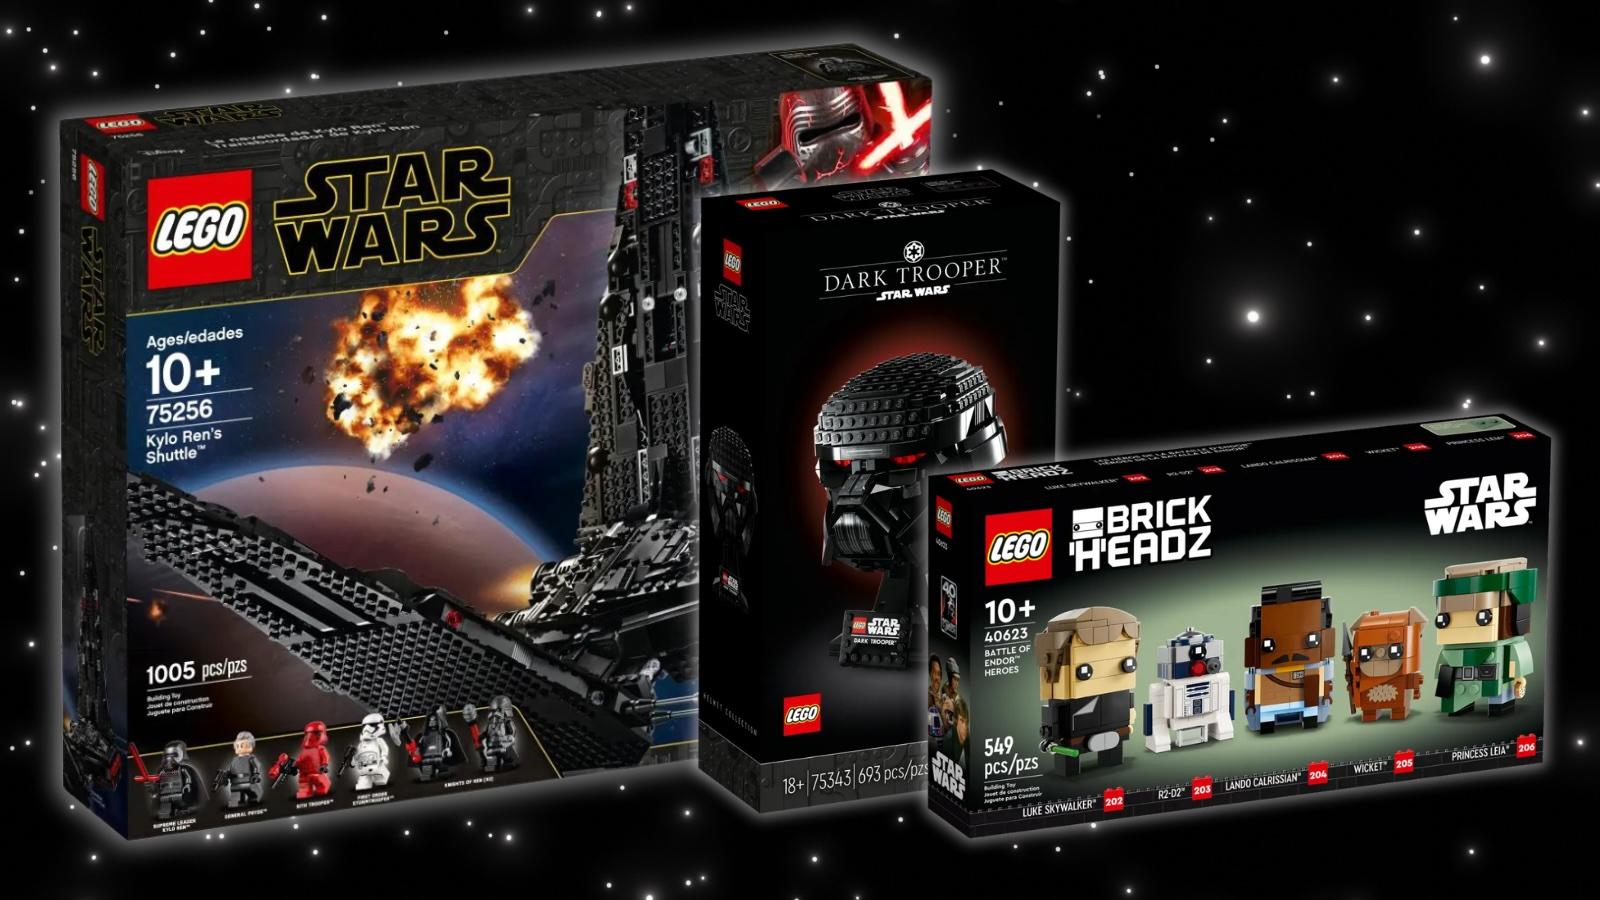 The three retired LEGO Star Wars set still available at Walmart